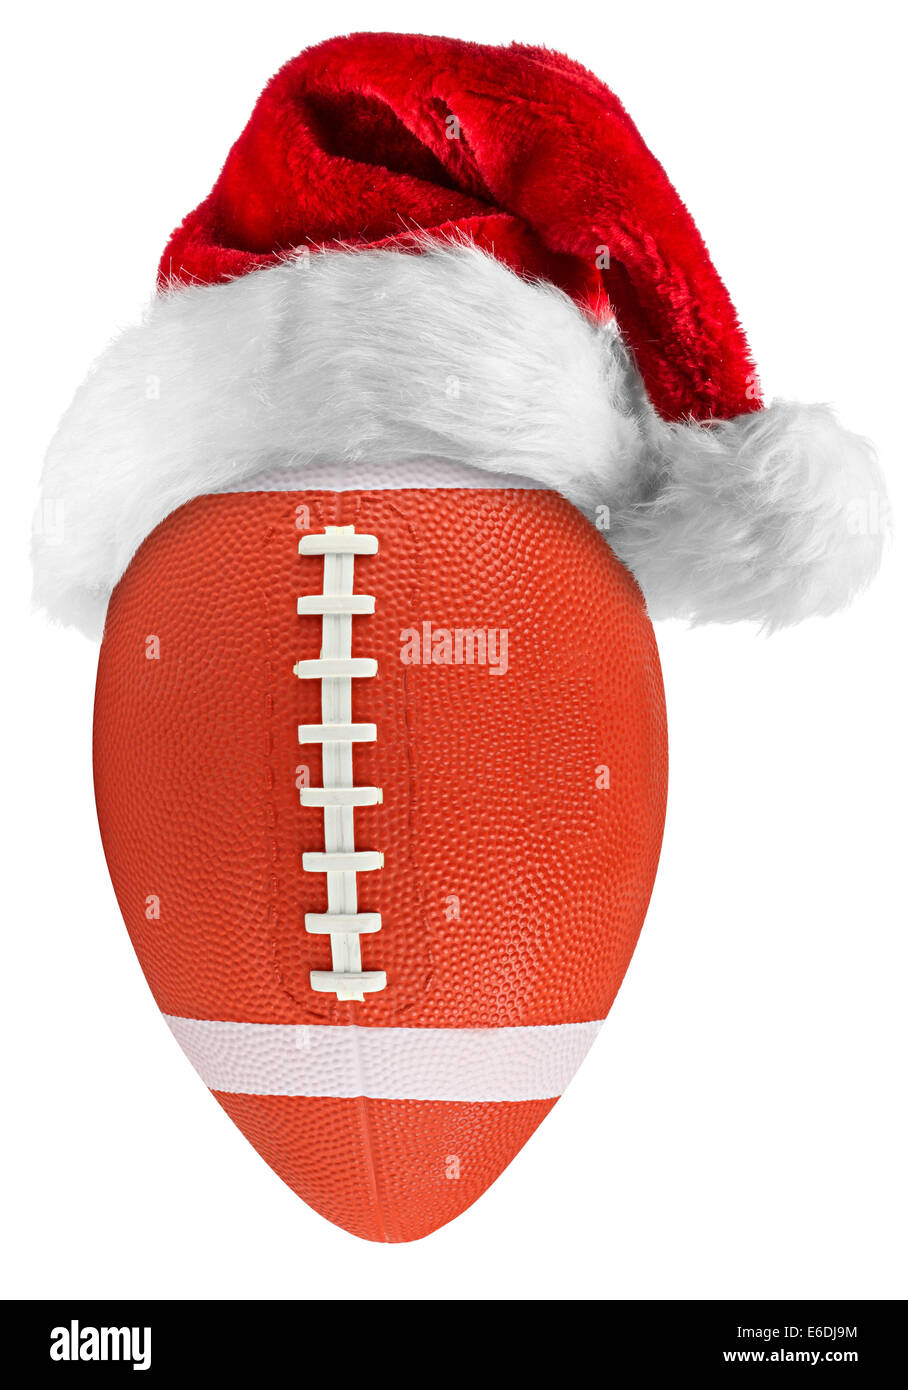 Ballon Rugby Noël Chapeau Père Noël Joyeux Noël Football Américain